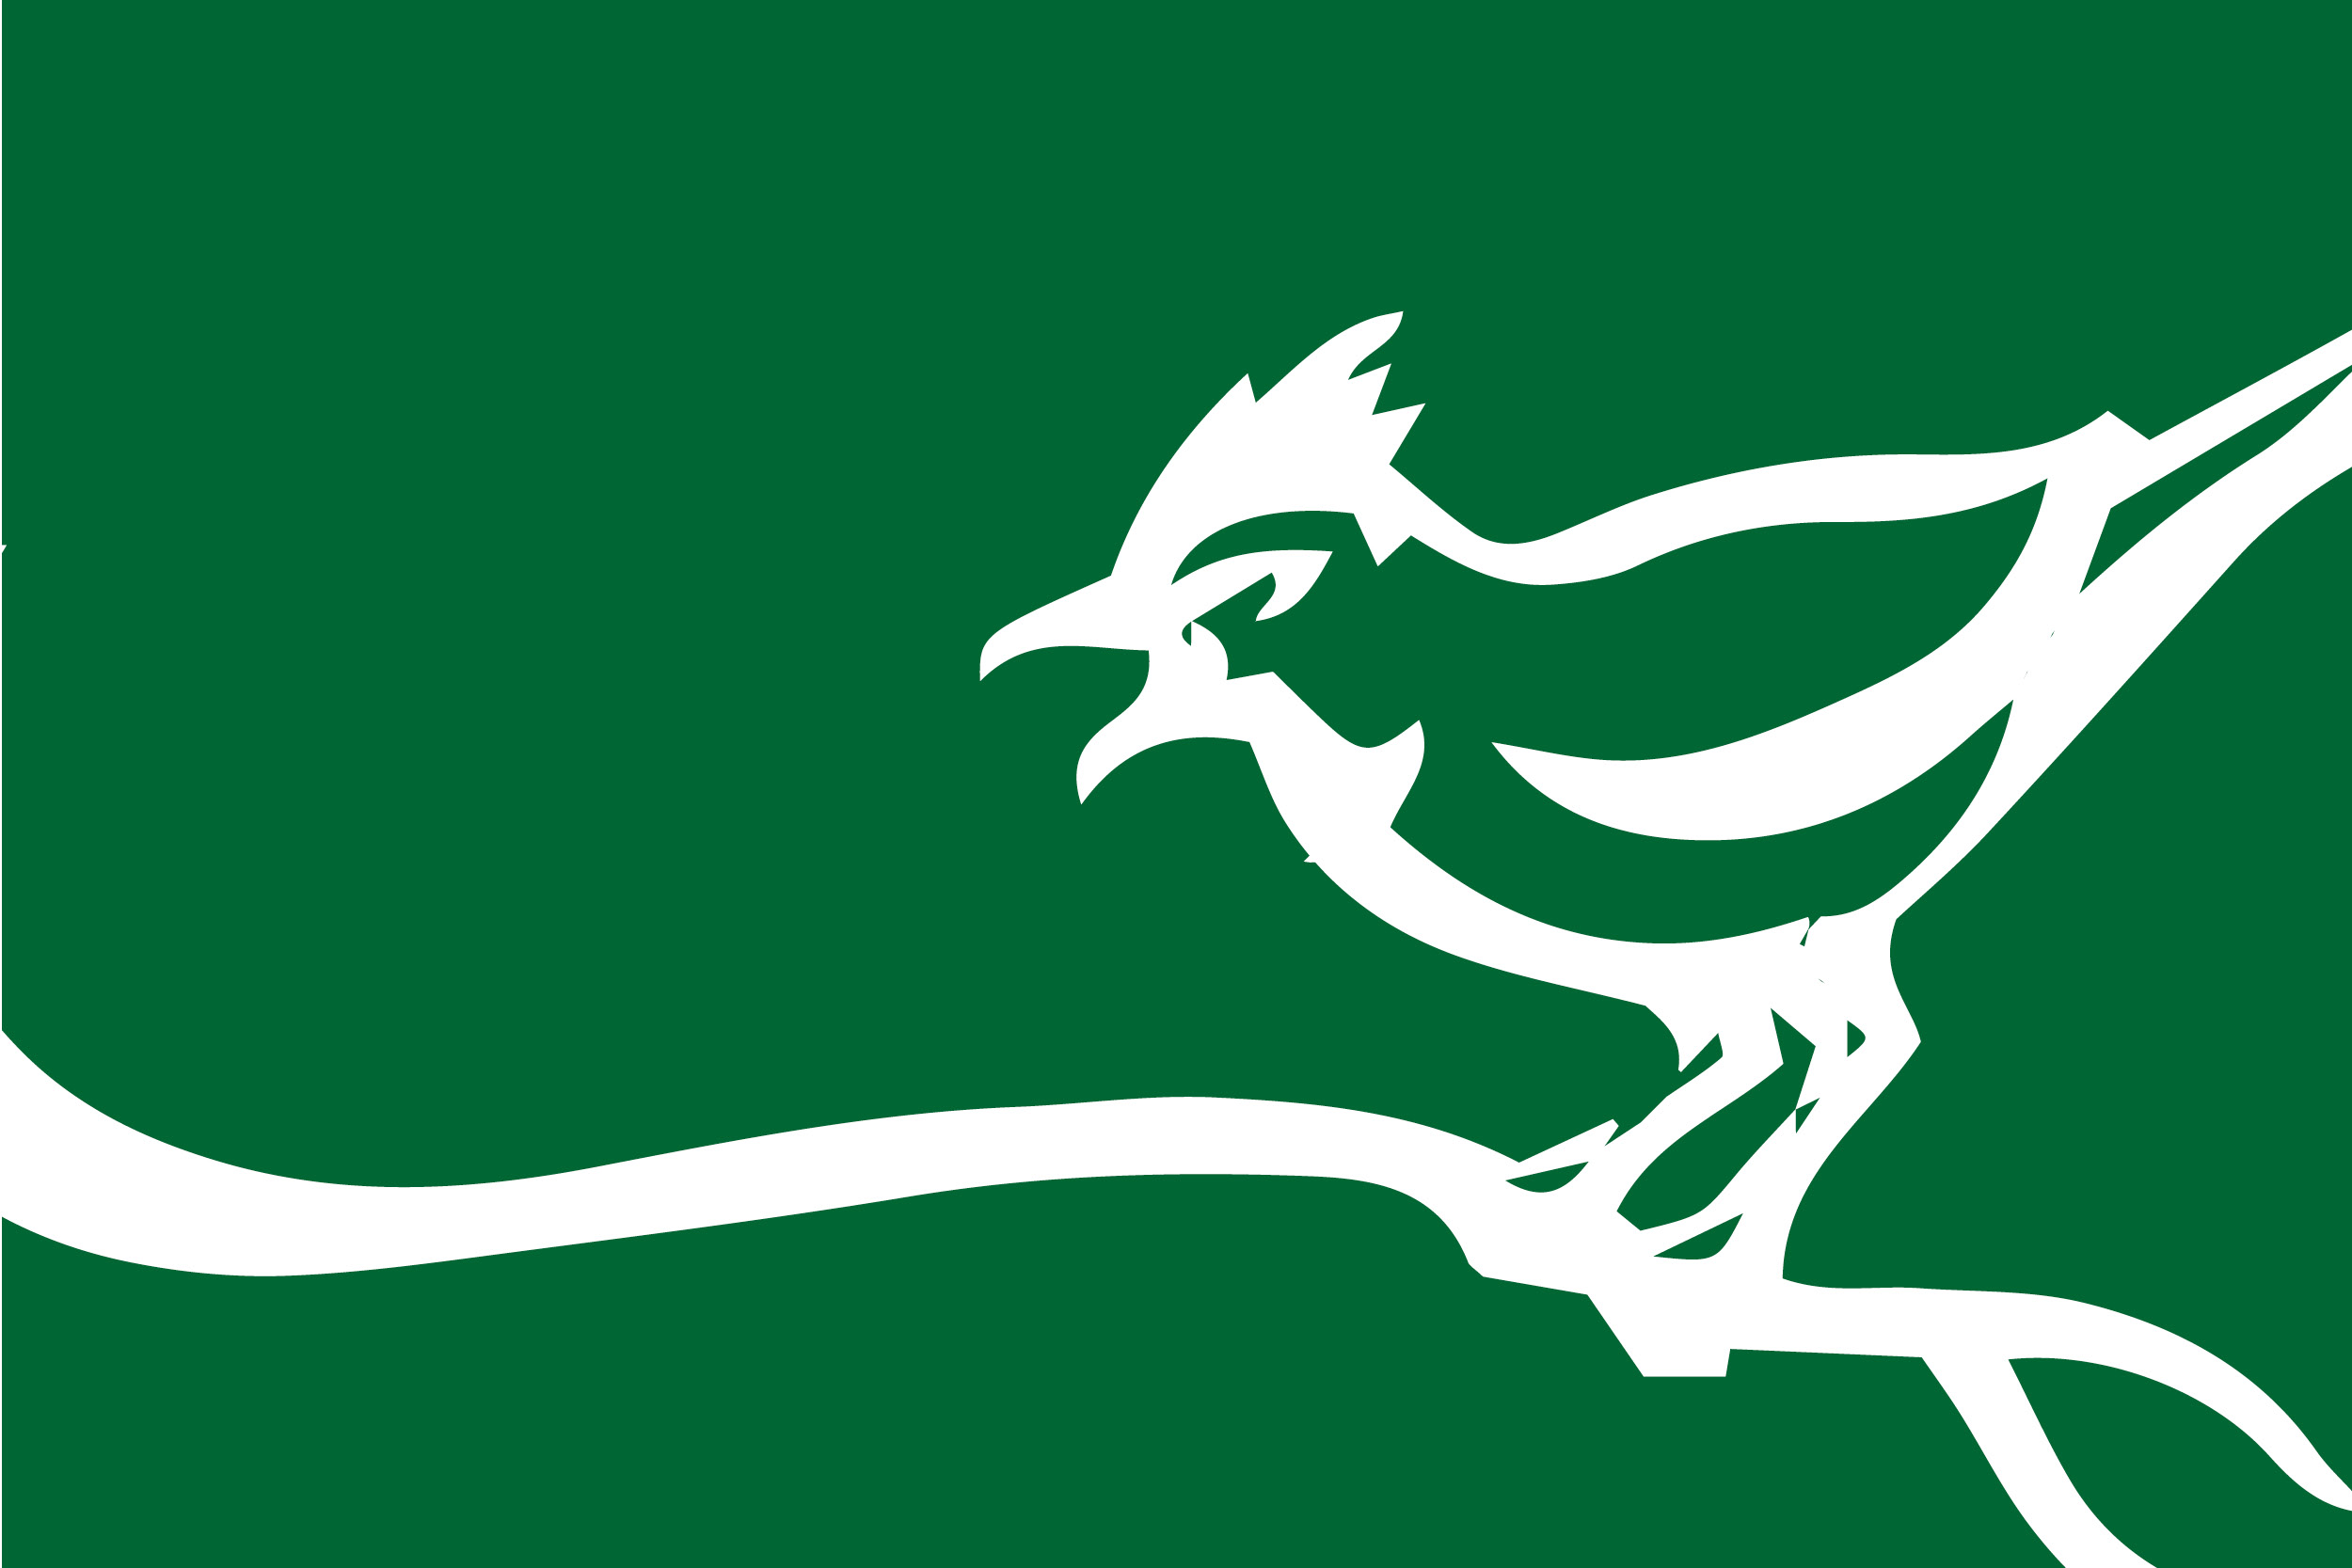 cuckoo logo